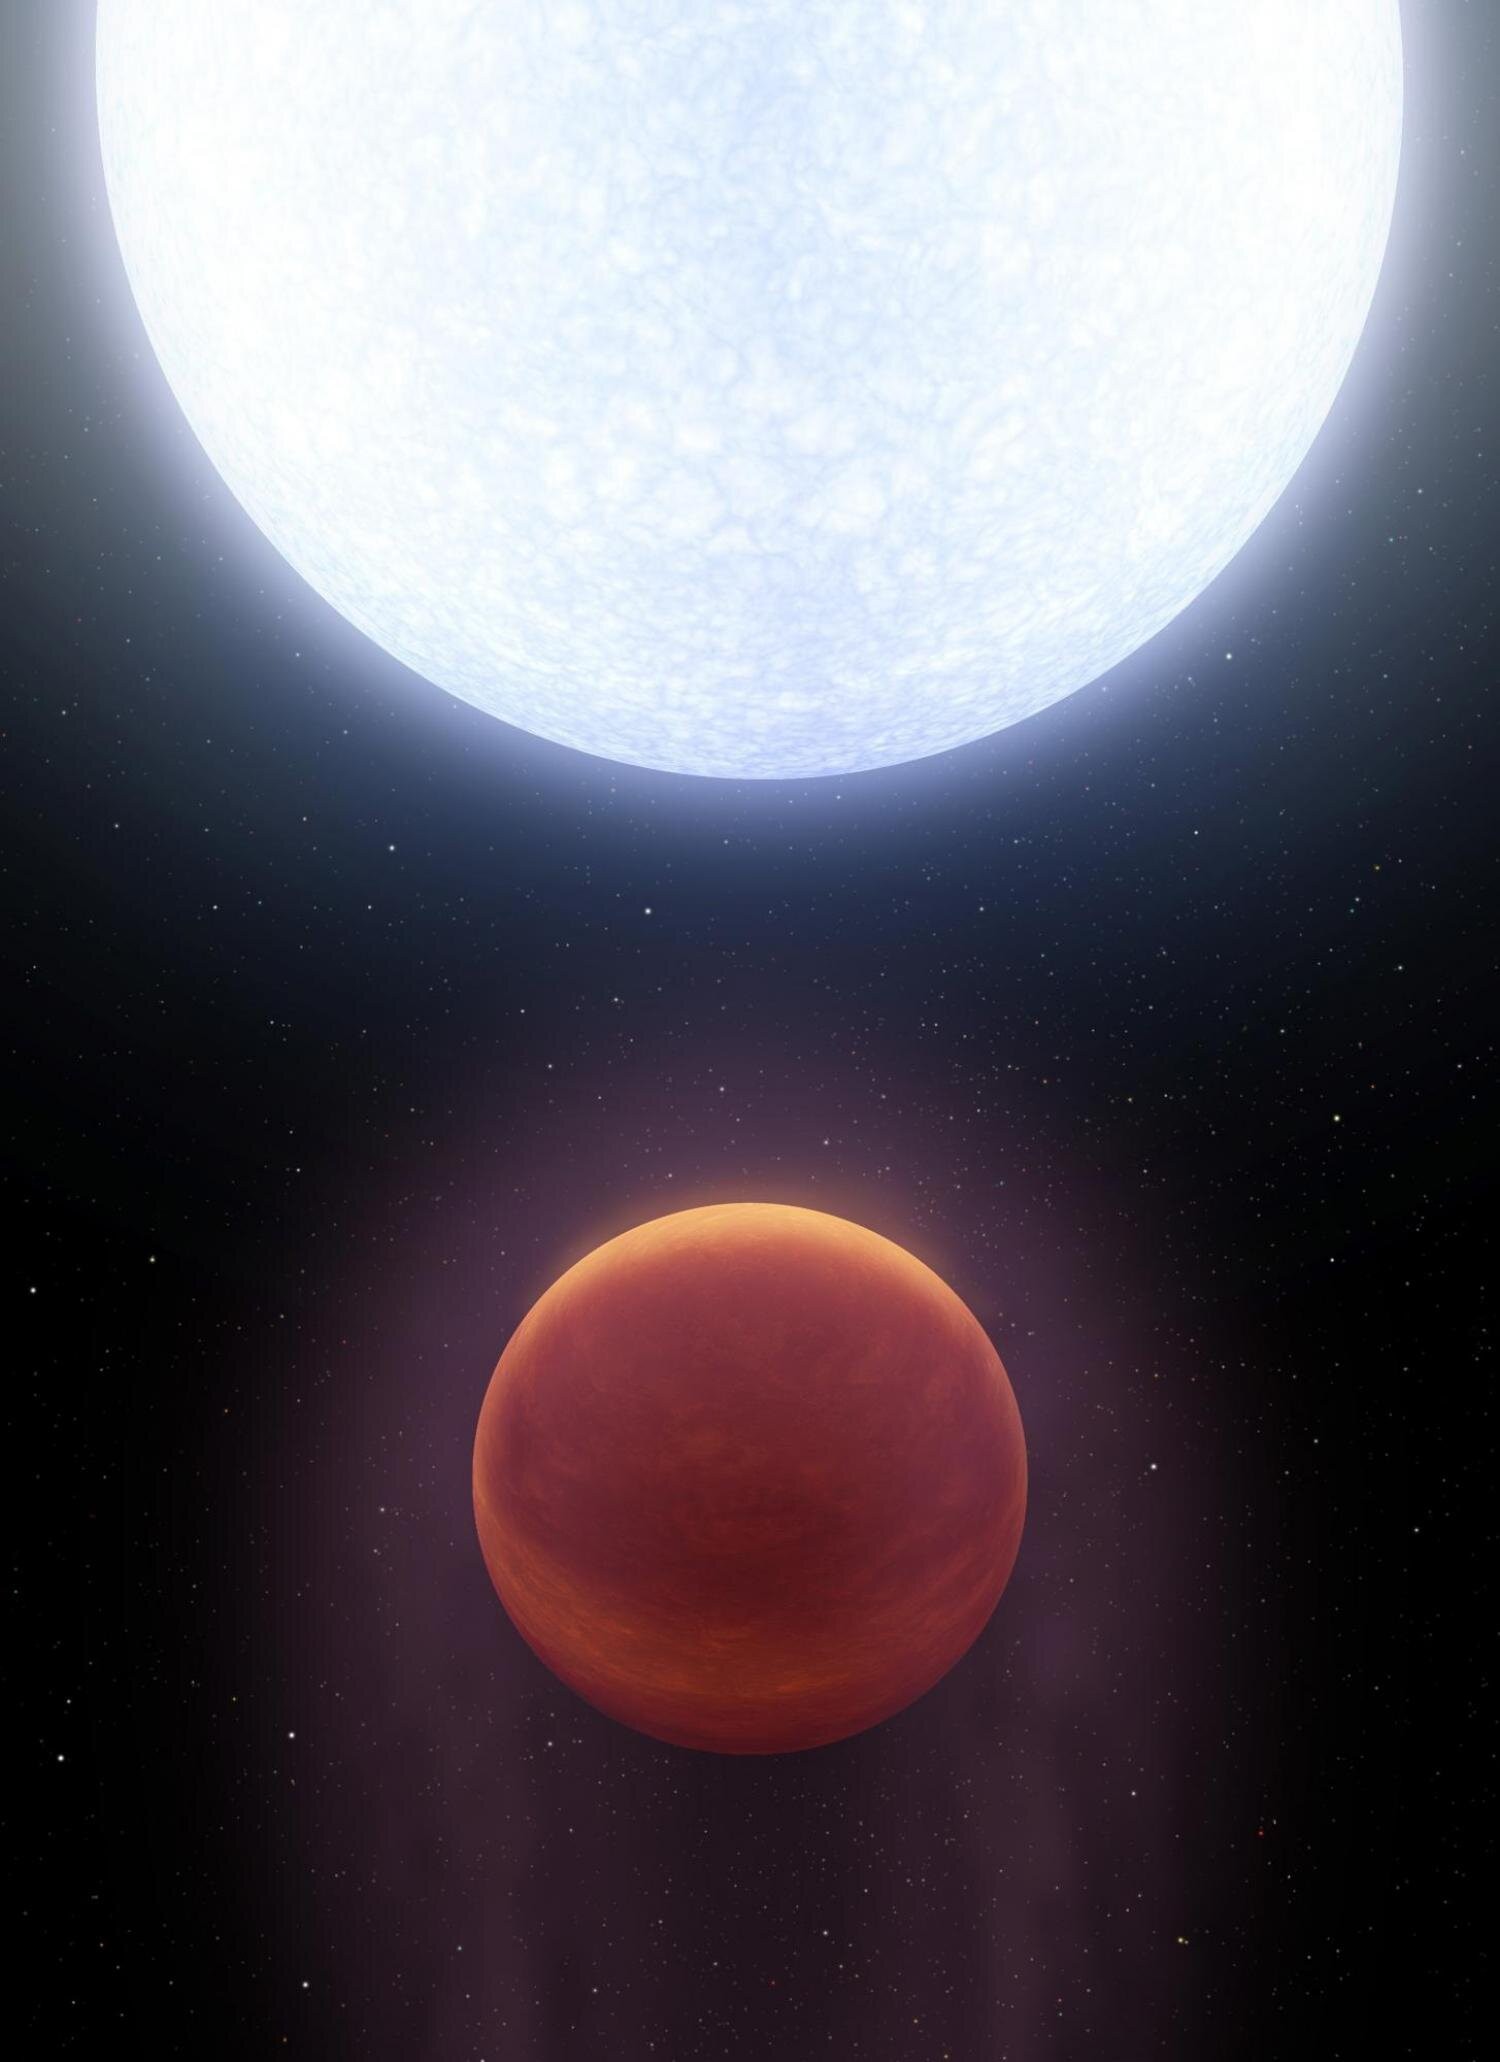 A giant planet orbiting the famous star Vega? 